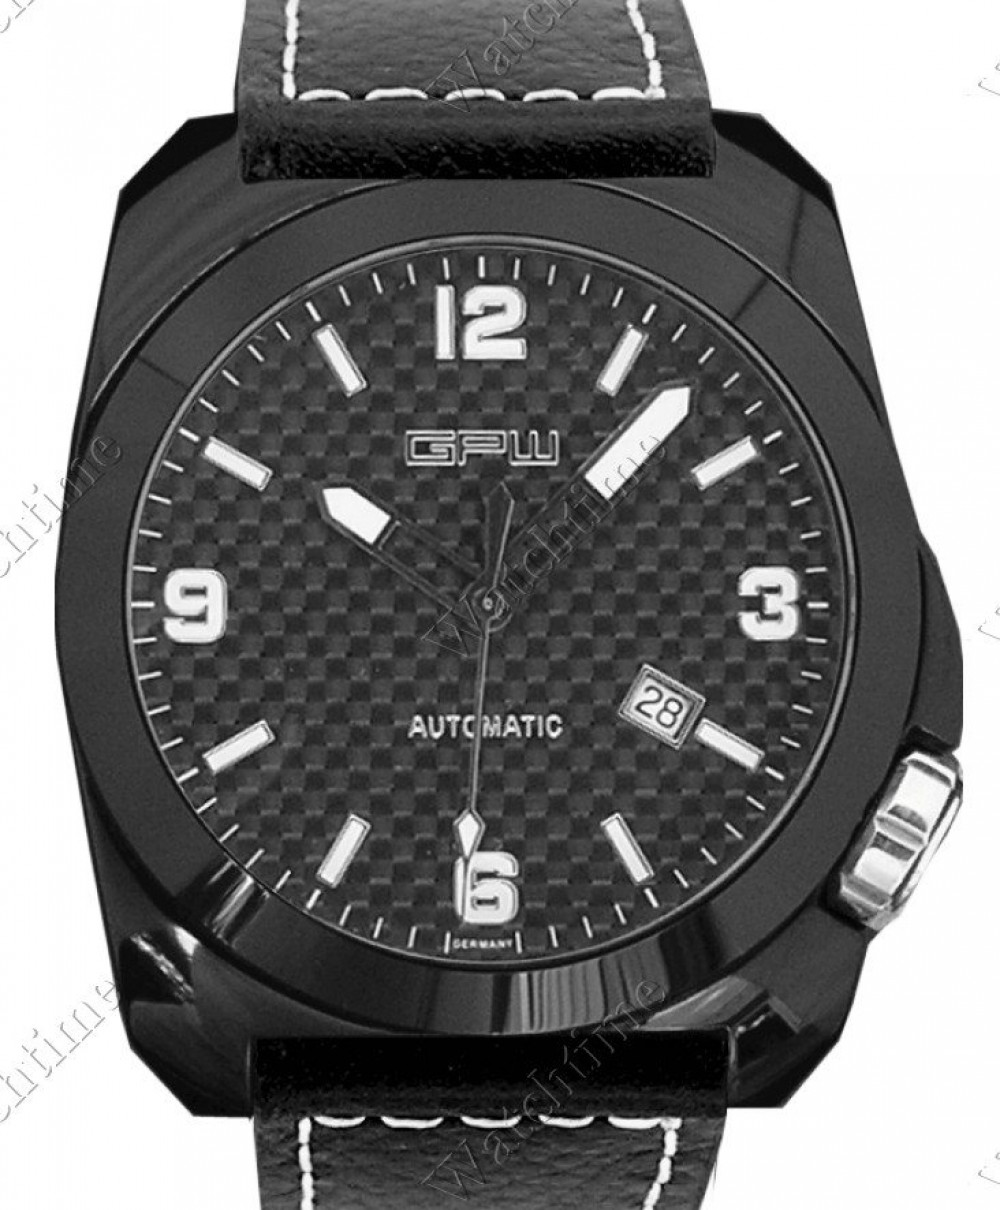 Zegarek firmy Arctos, model GPW K1